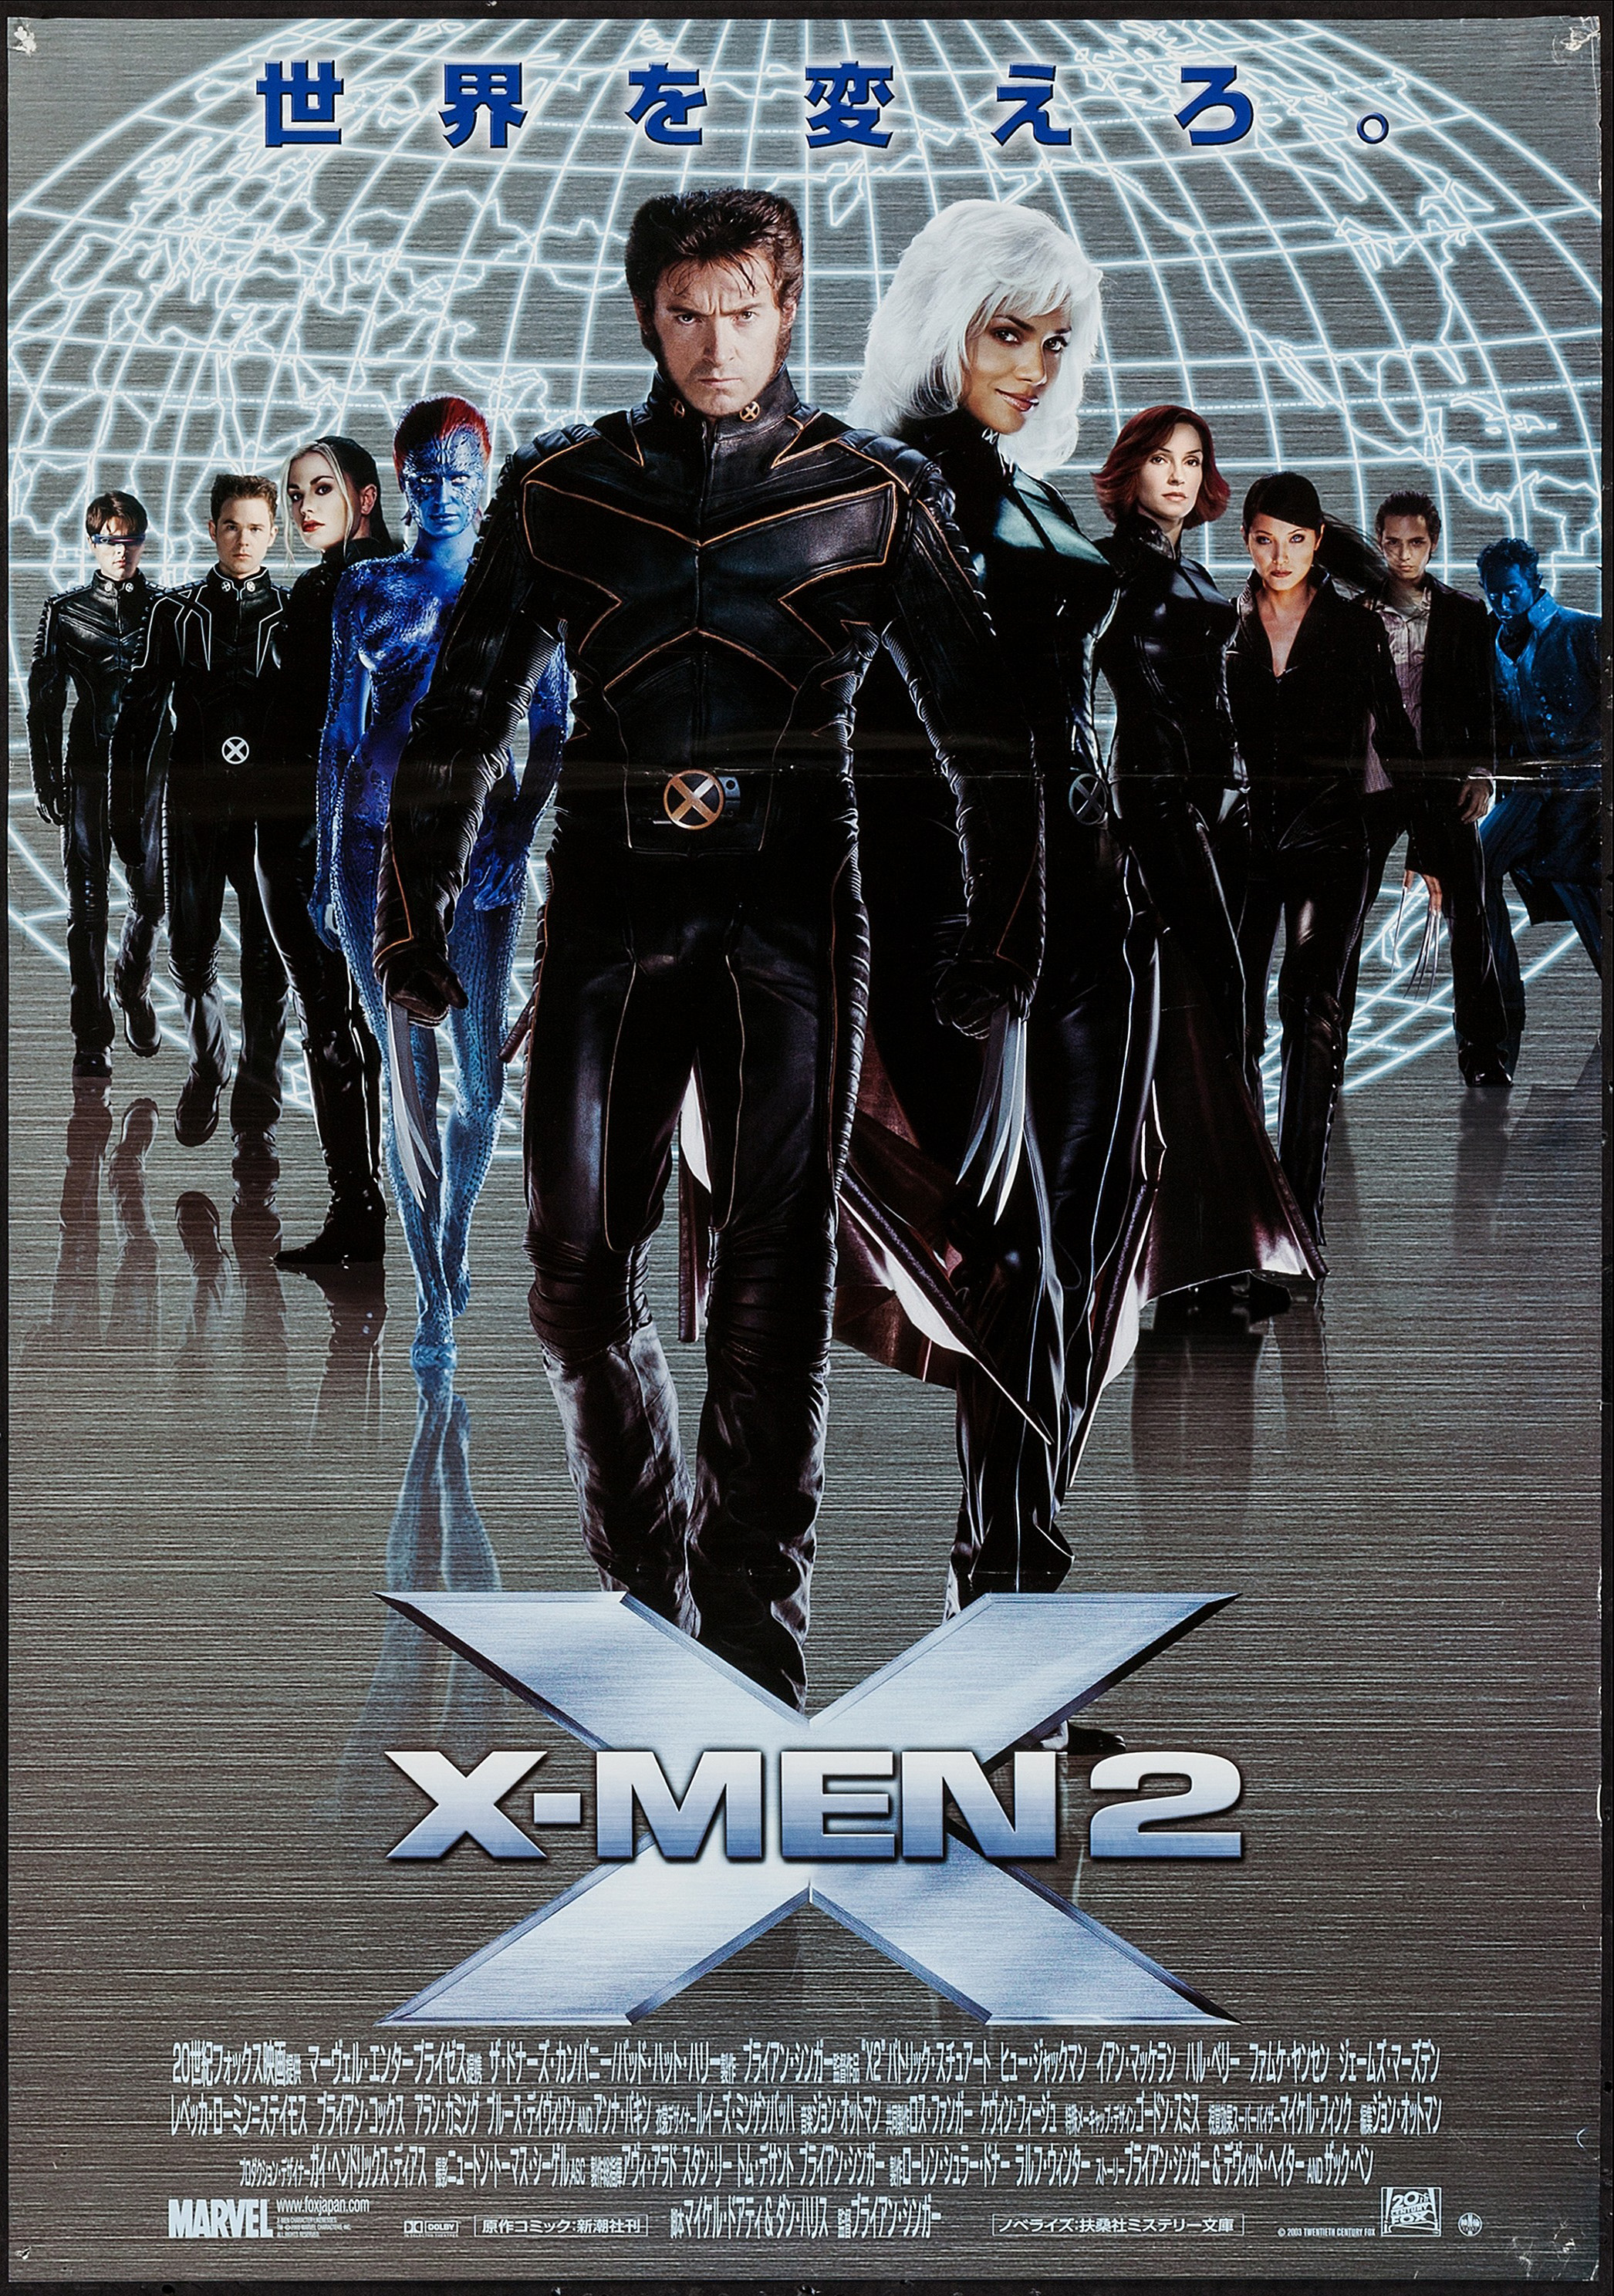 XMen 2 (X2 (XMen 2 XMen United)) (2003) Crtelesmix